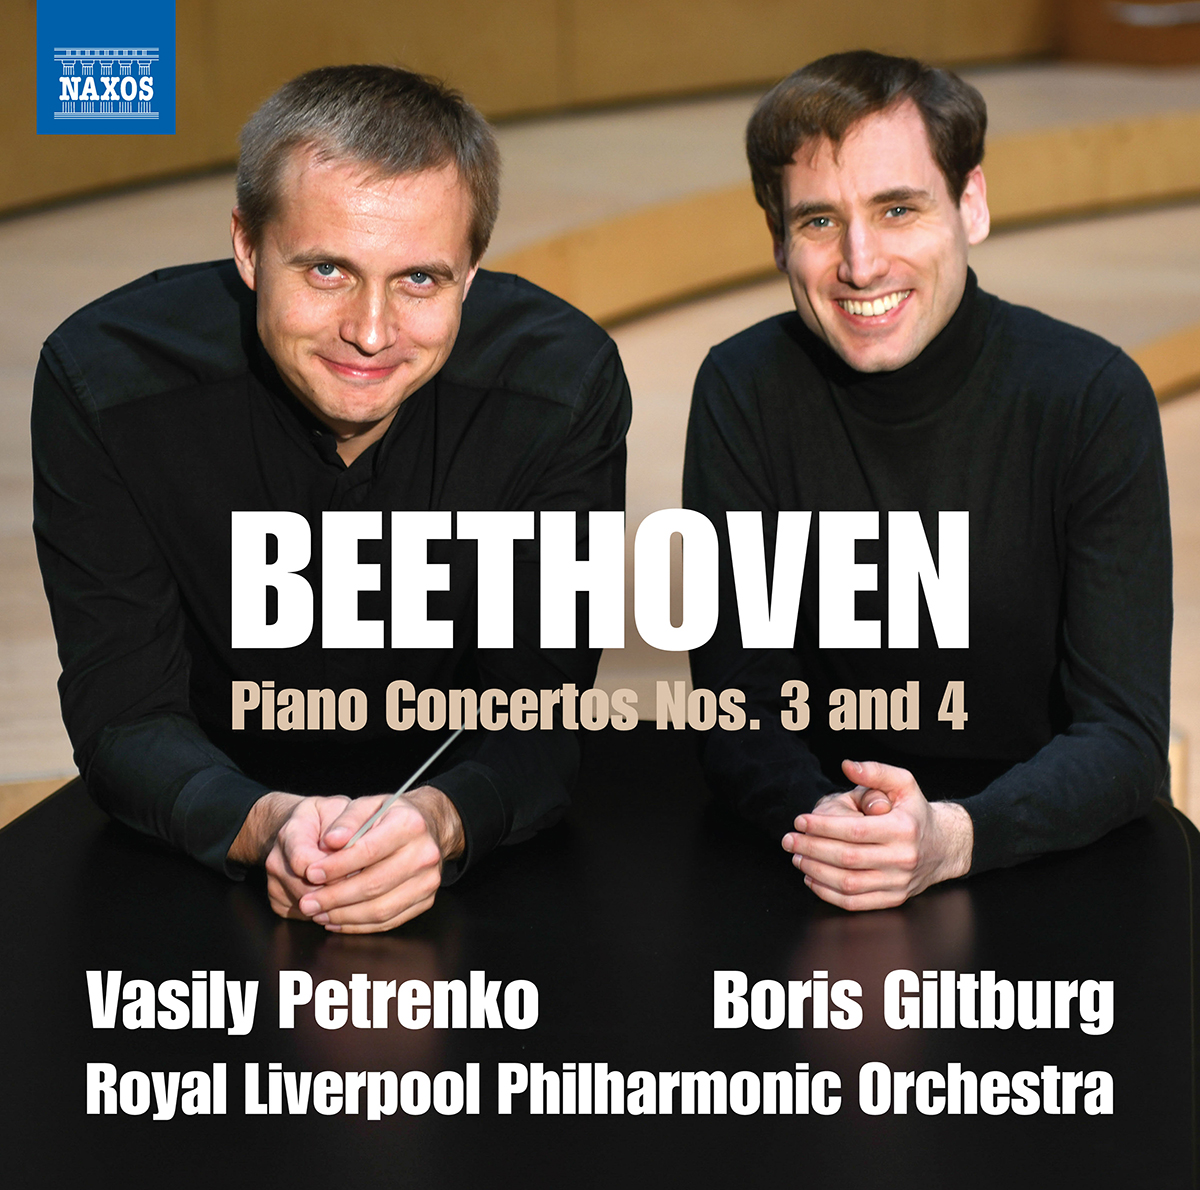 Vasily Petrenko and Boris Giltburg portrait for Beethoven Piano Concertos 3 & 4 album cover